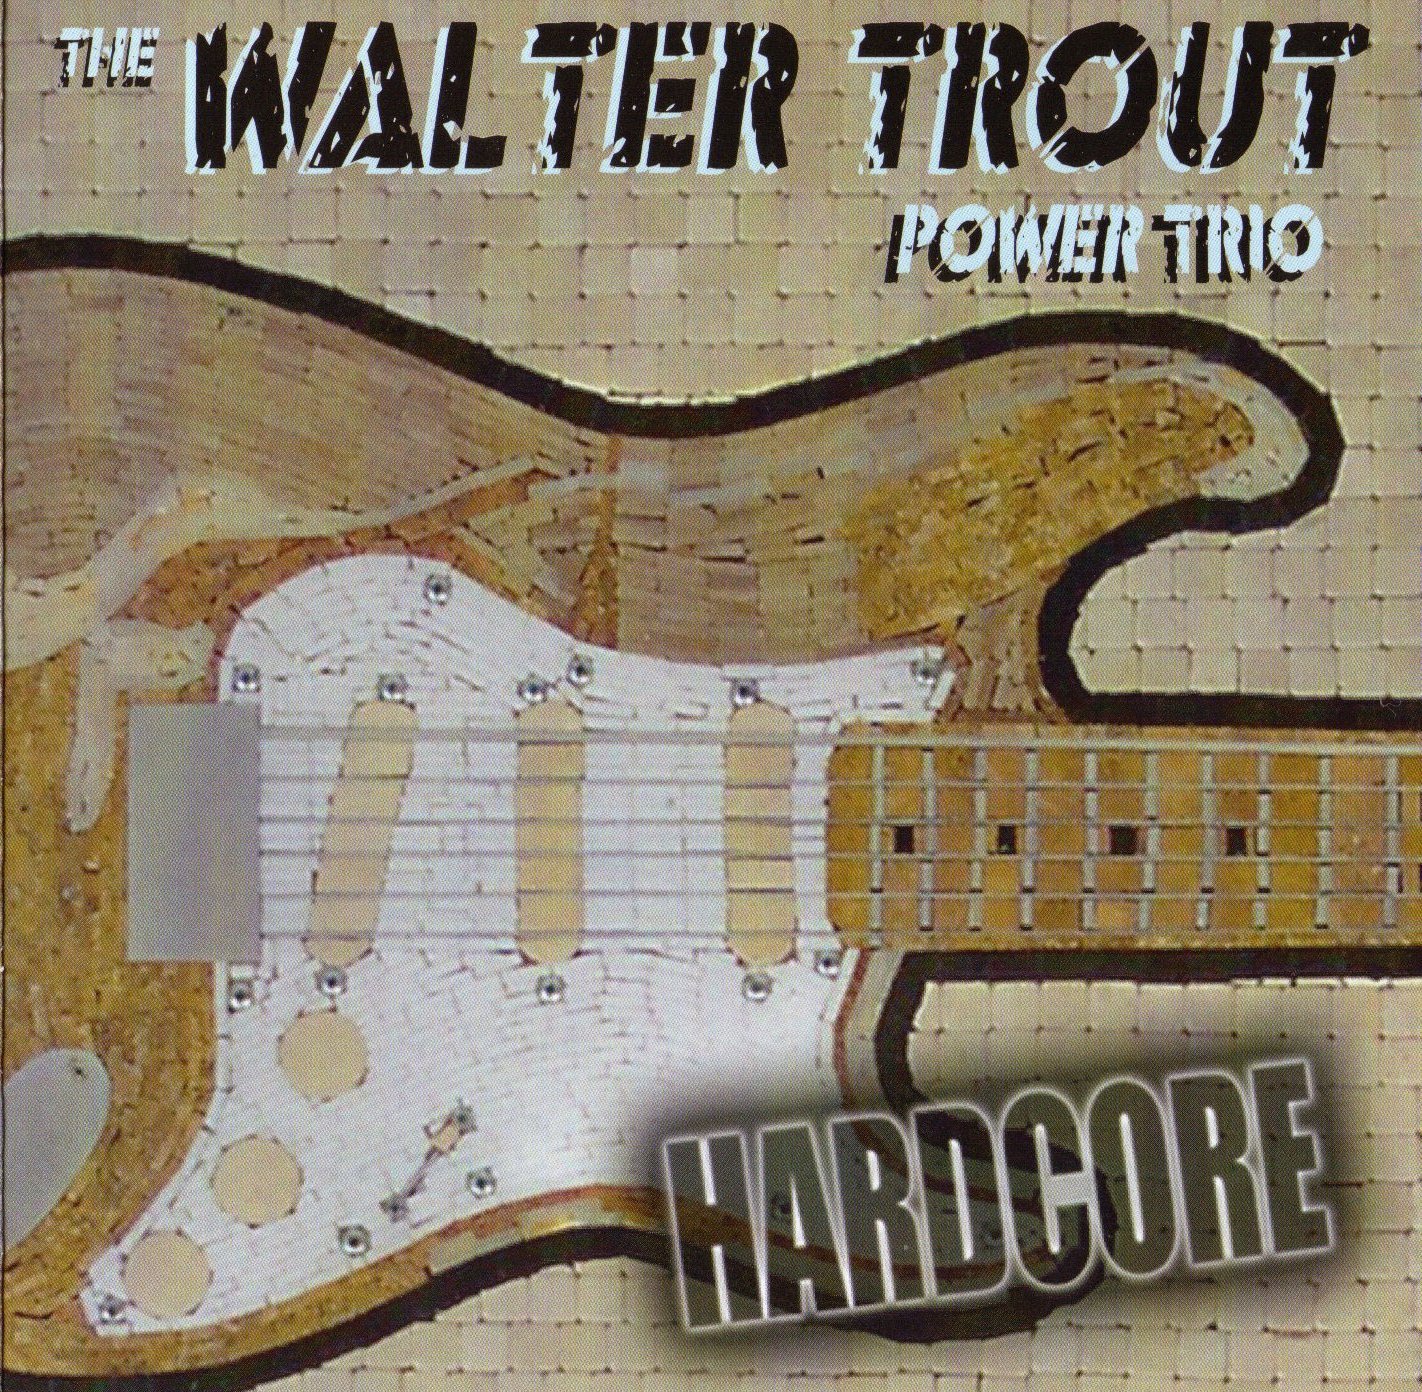 The Walter Trout Power Trio - Hardcore